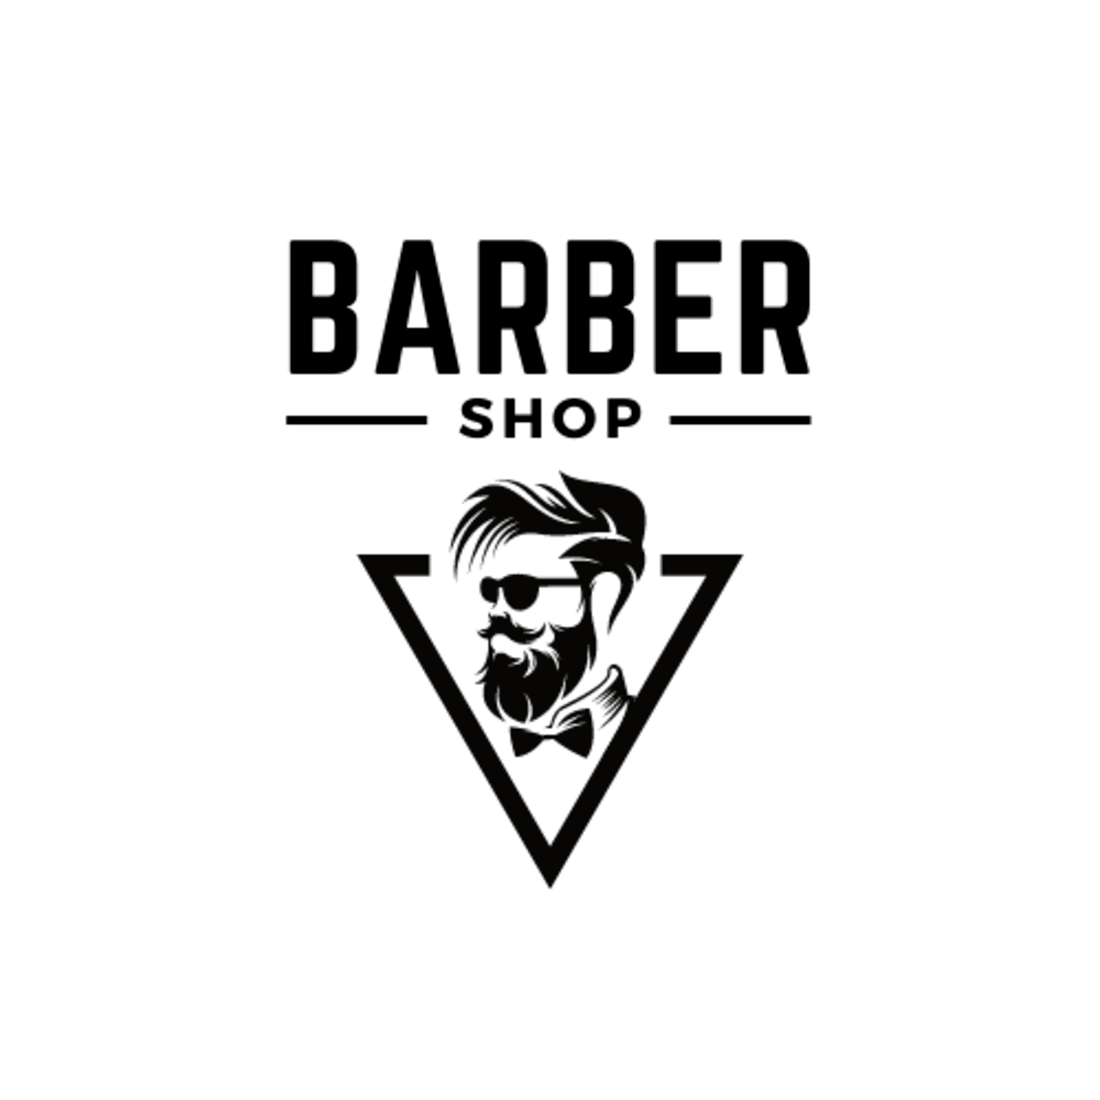 Barbershop Logo Collection Graphic by rukurustudio · Creative Fabrica